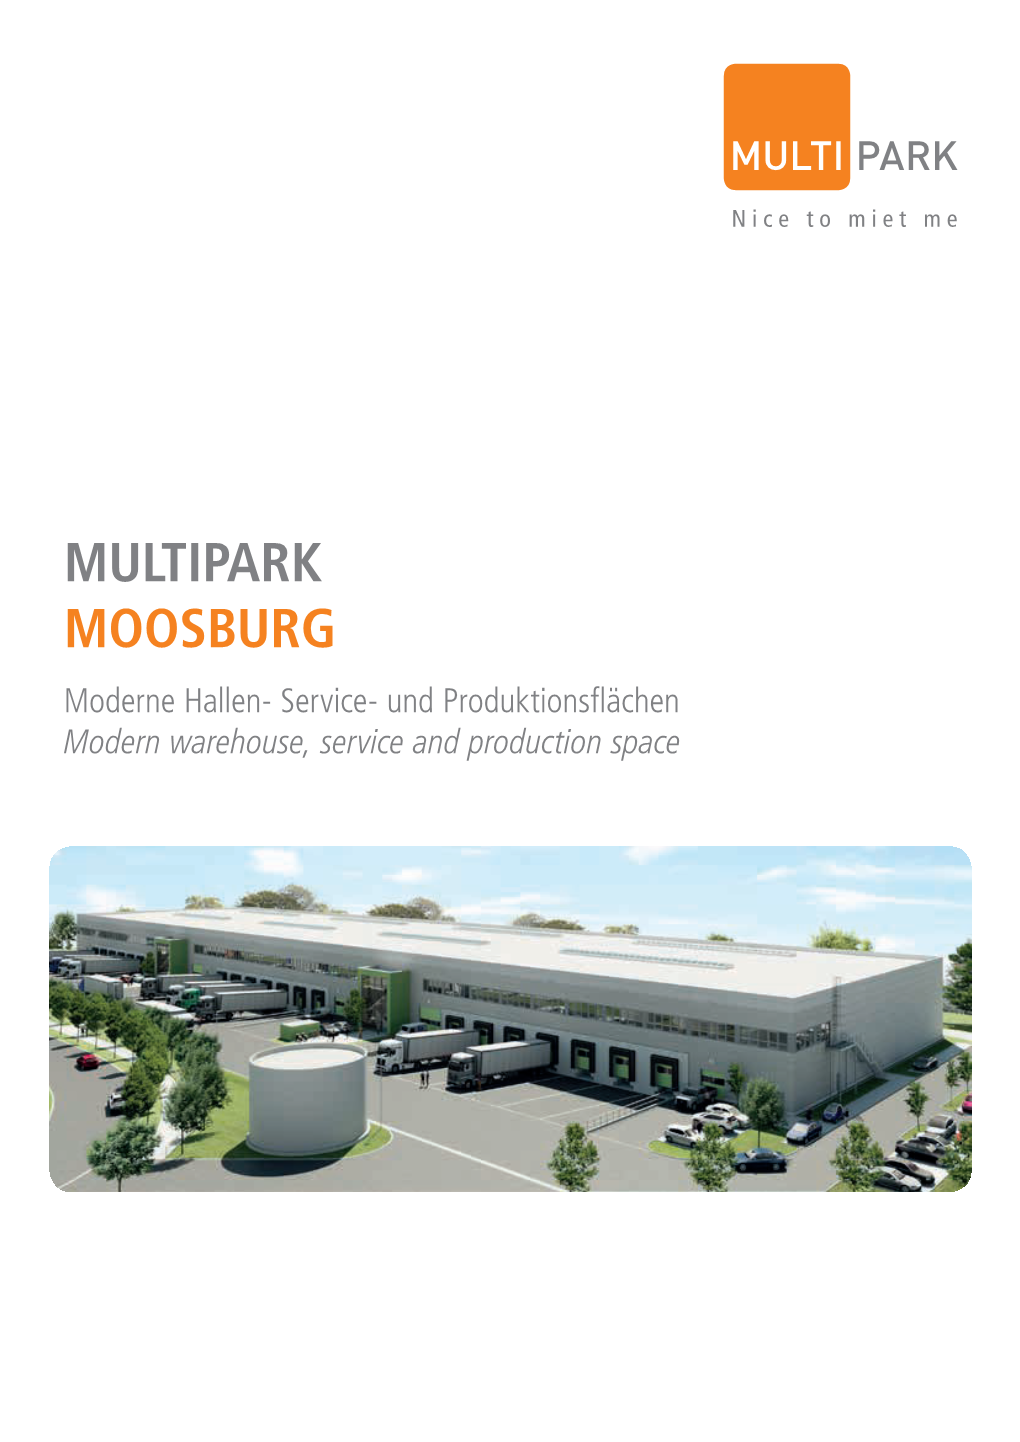 Multipark Moosburg